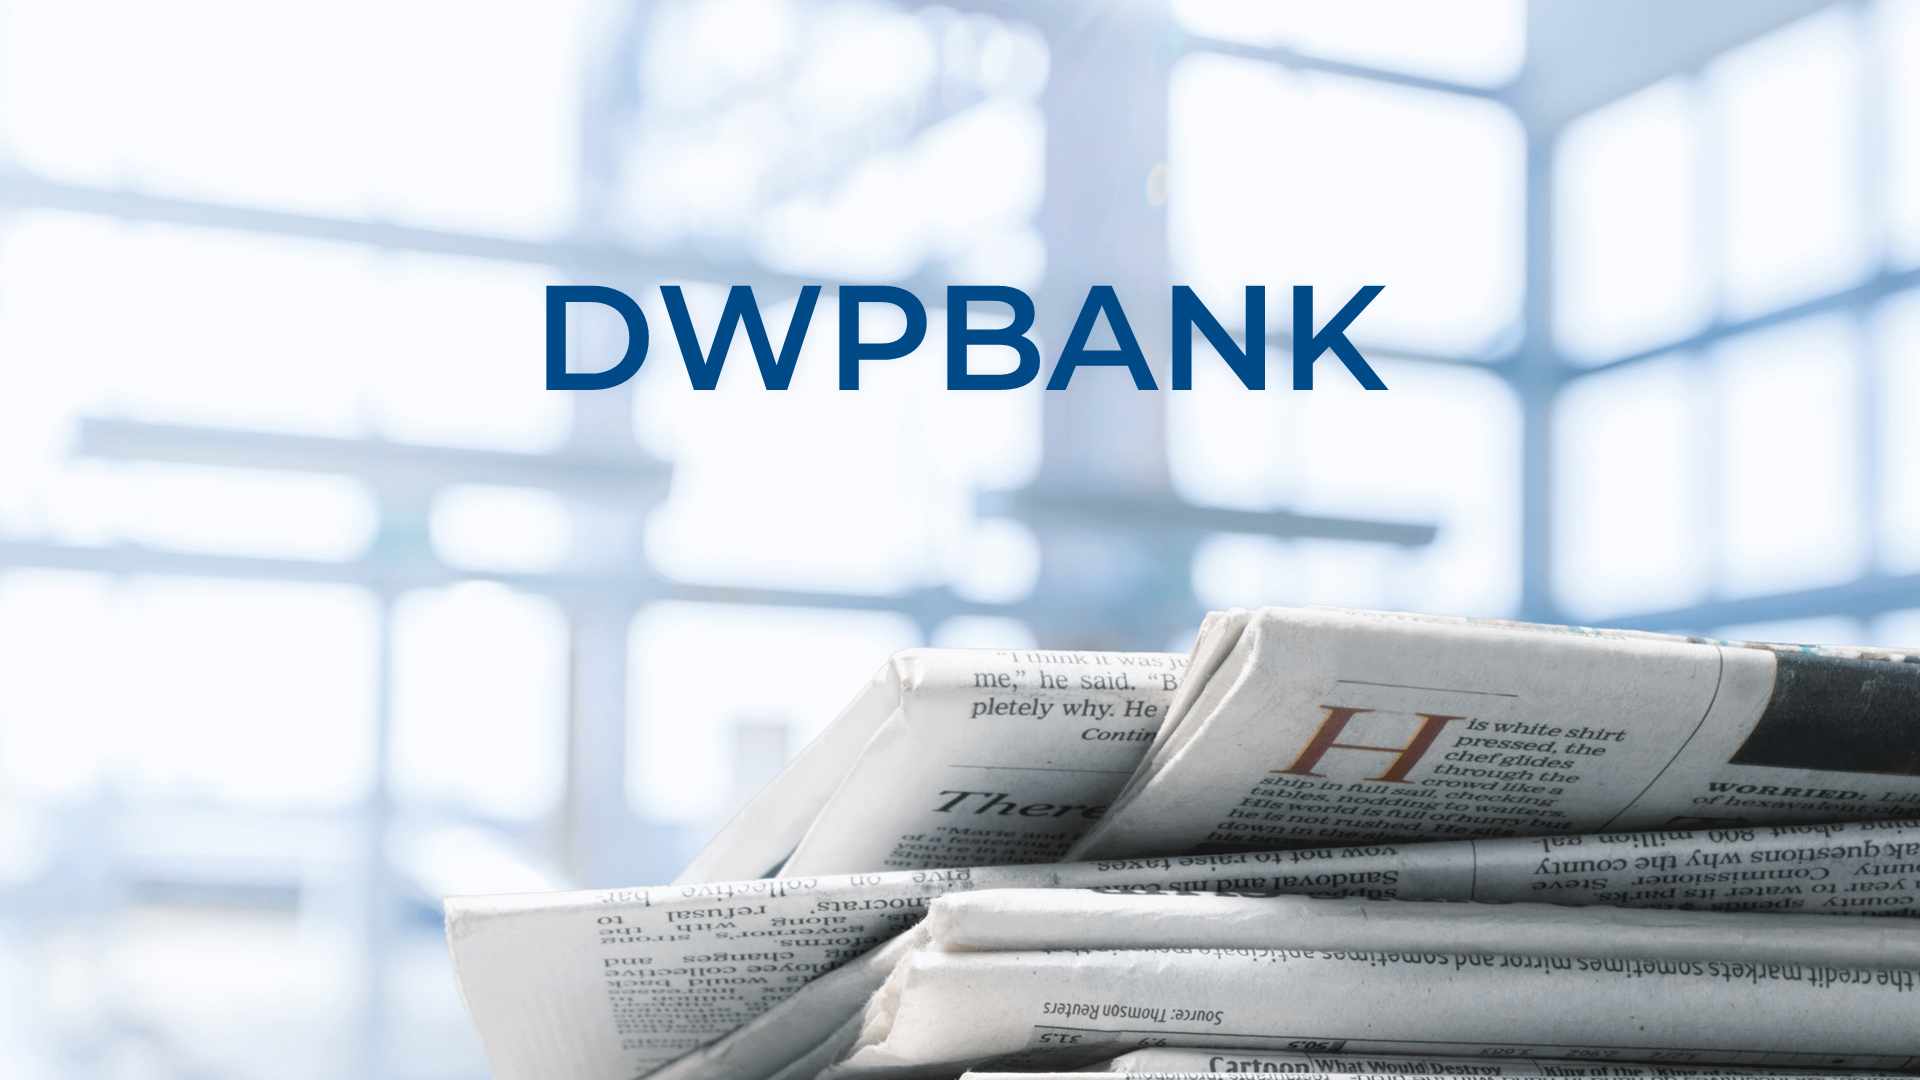 dwpbank 1200 musterisine bitcoin transferi hizmeti sunacakfsdzf